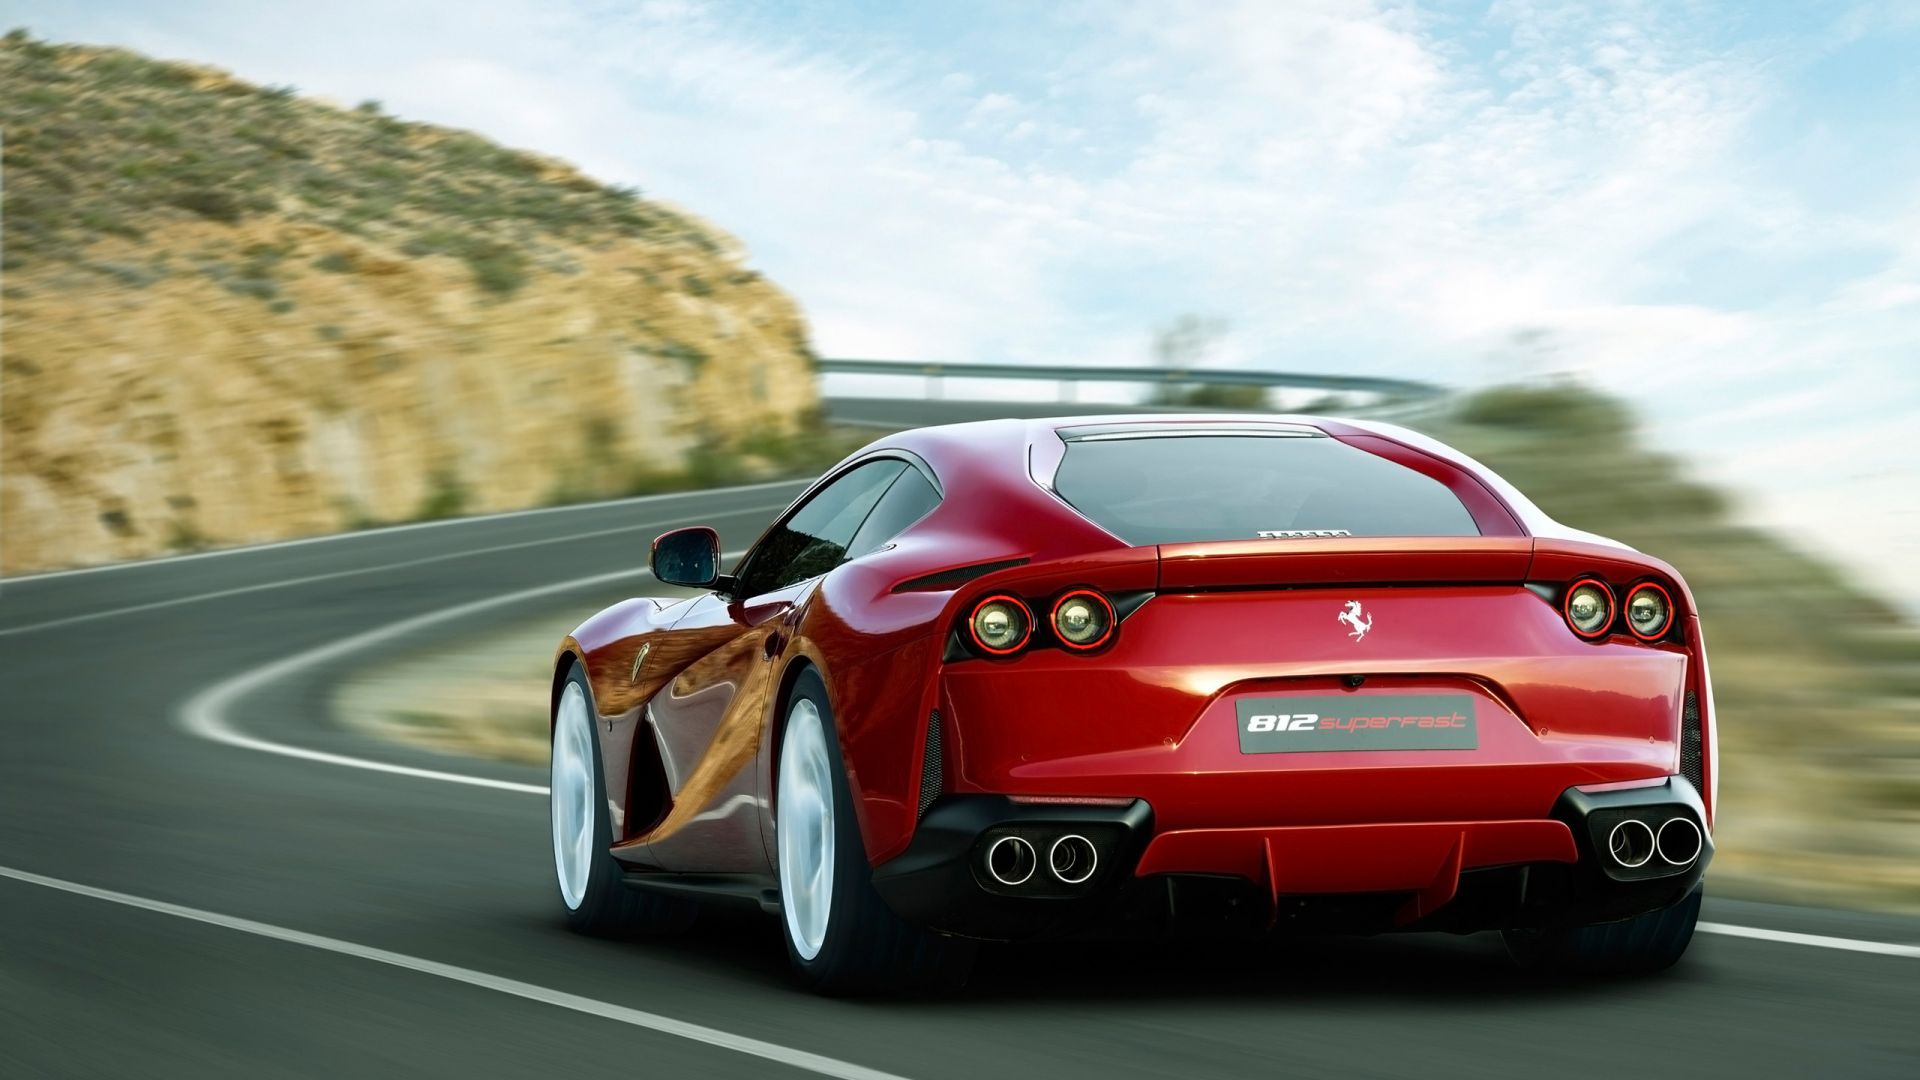 Desktop Wallpaper Ferrari 812, Sport Superfast, Red Car, Rear View, Hd Image,  Picture, Background, Qvnmg